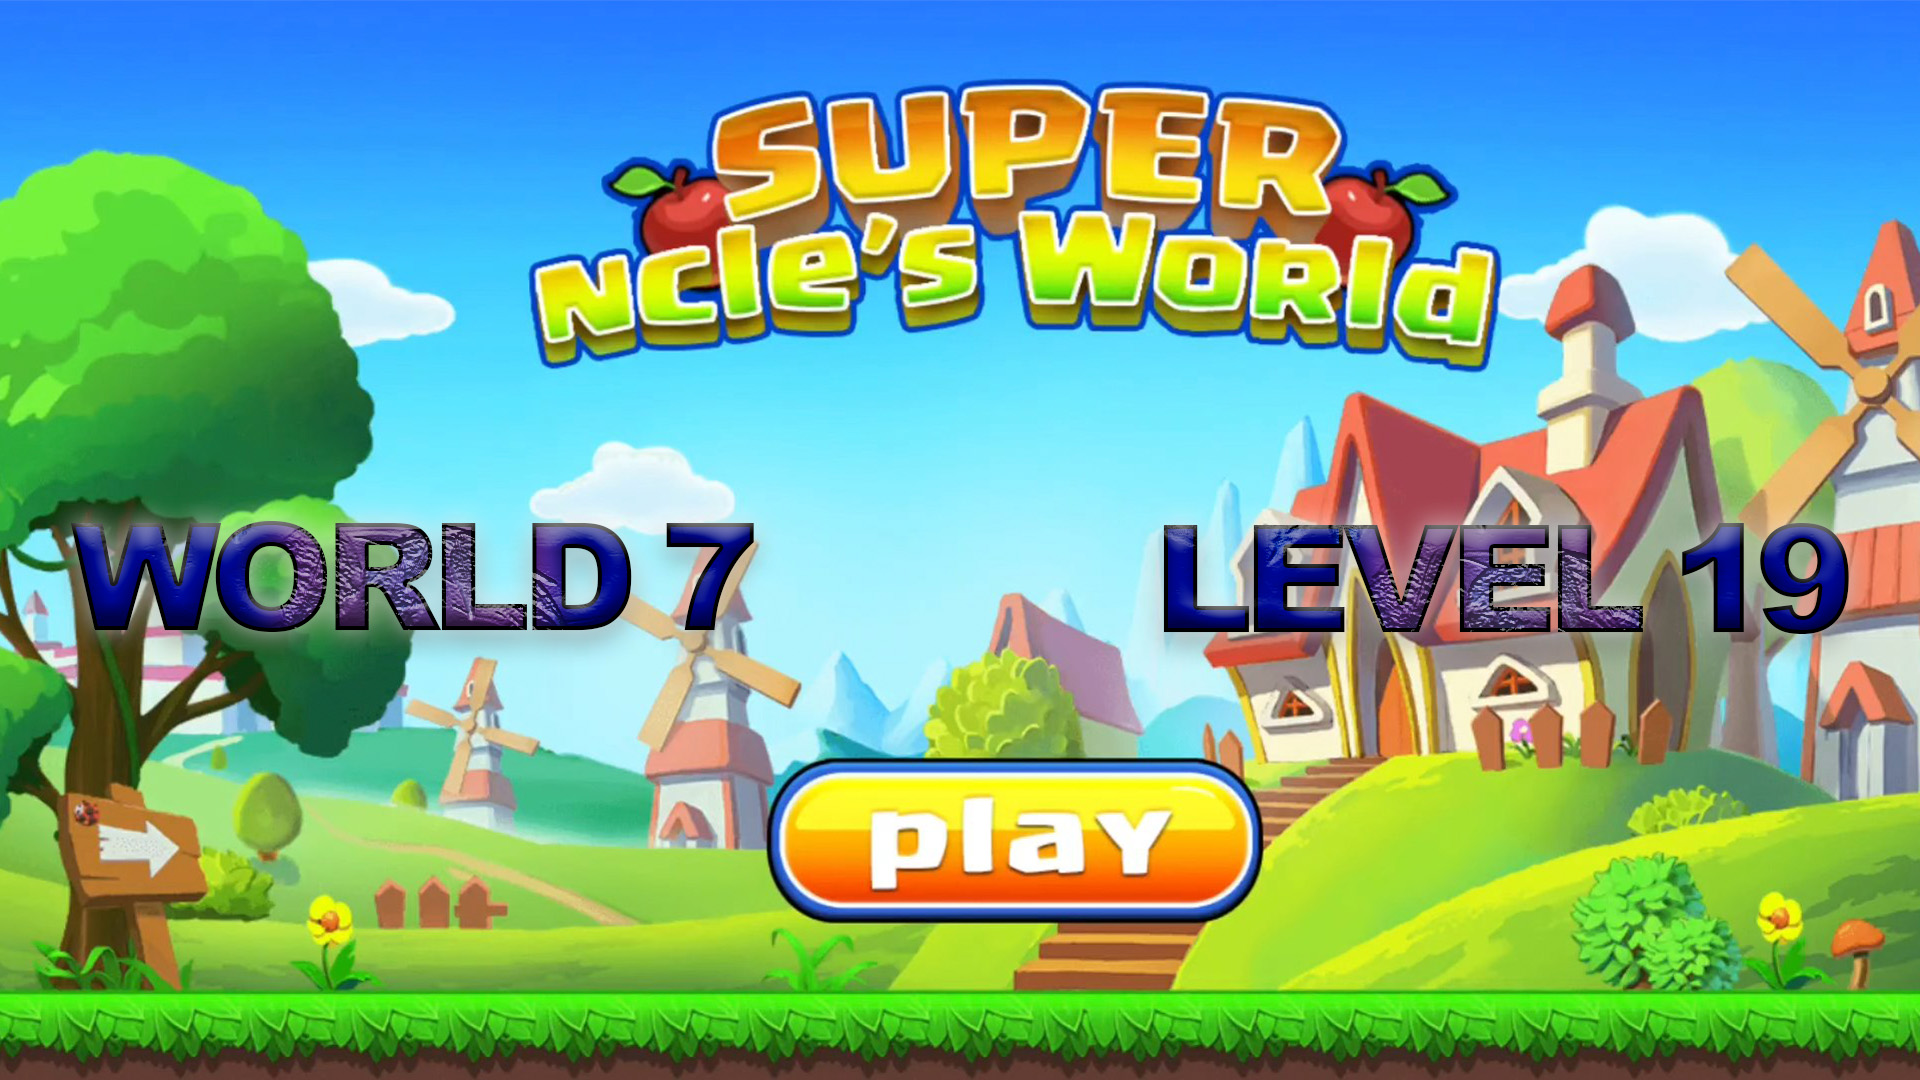 Super ncle's  World 7. Level 19.